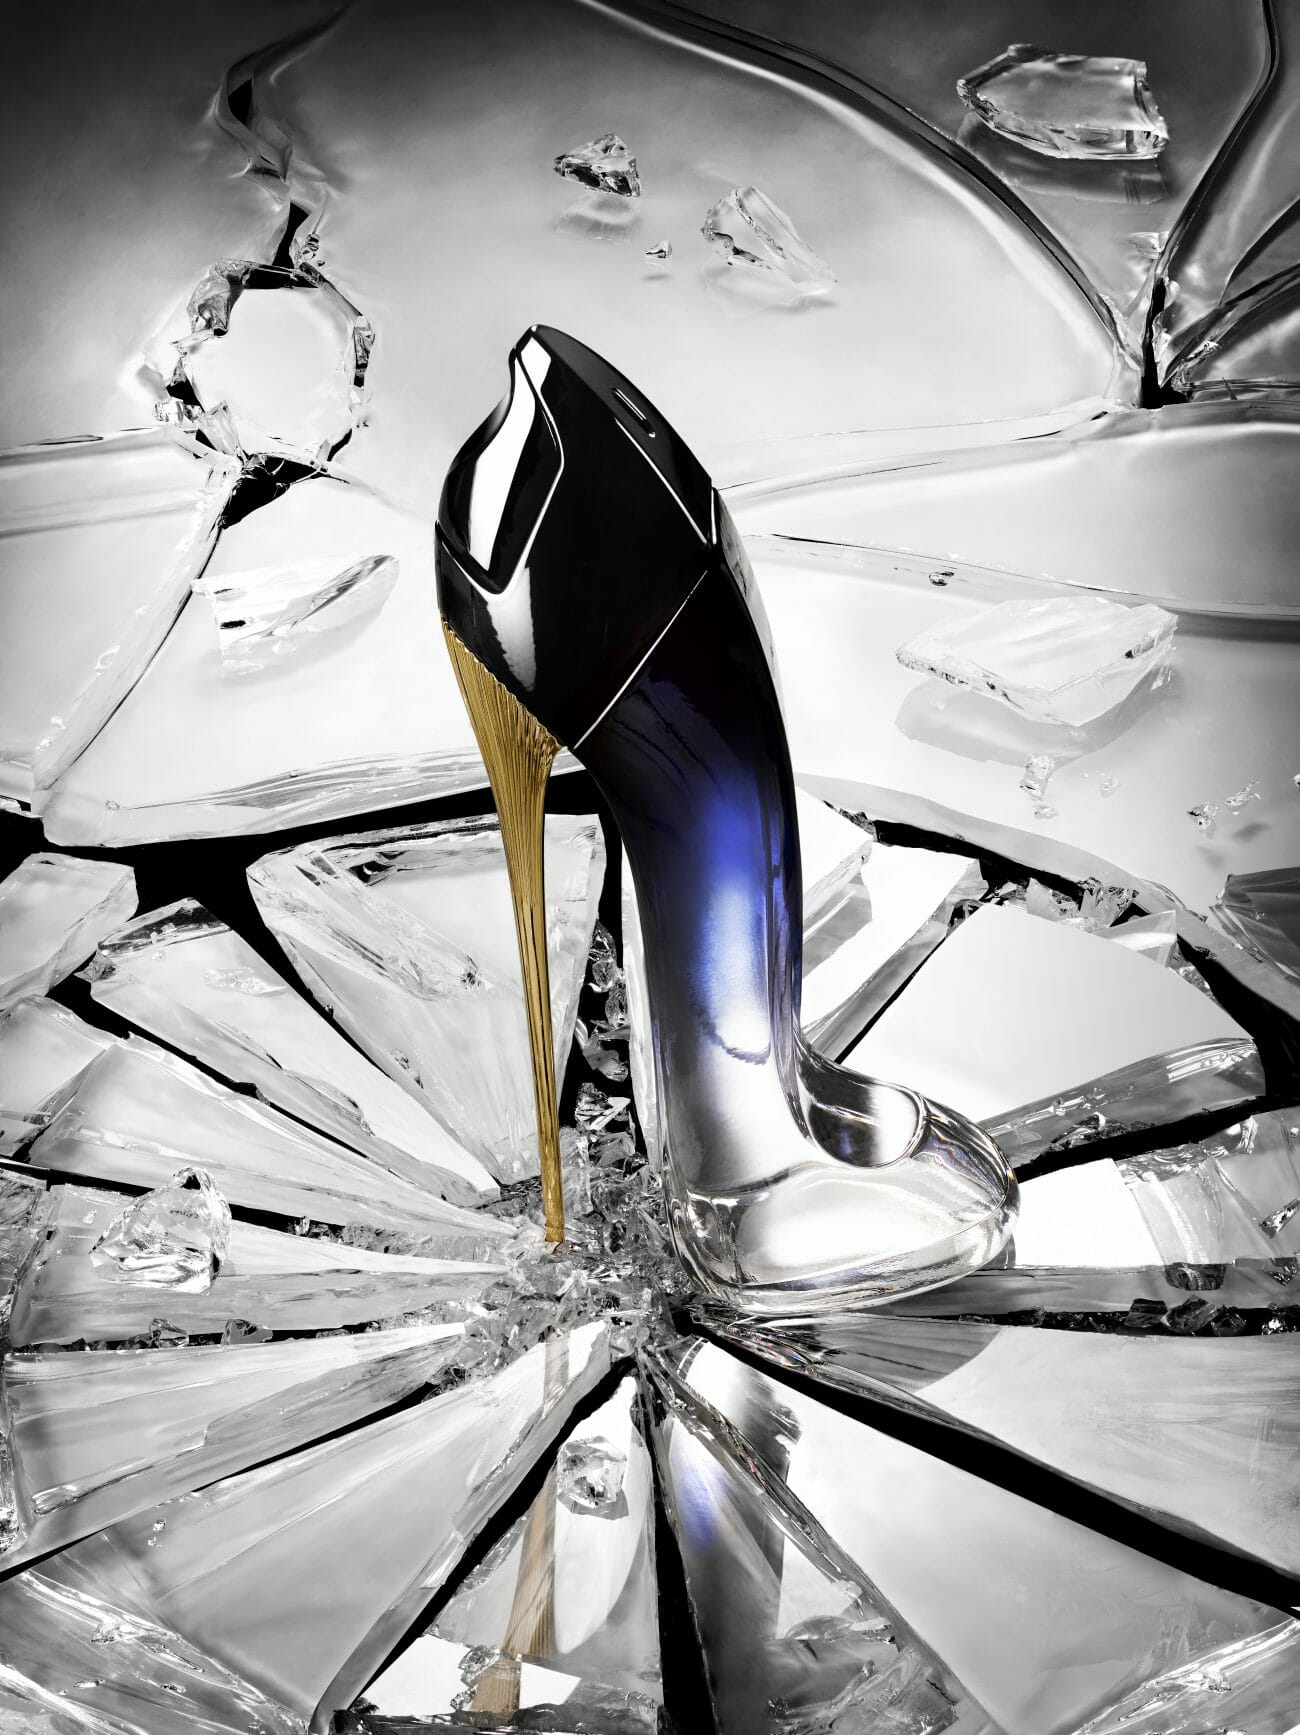 Carolina Herrera Official Site | Avant-Elegant Fashion & Fragrances